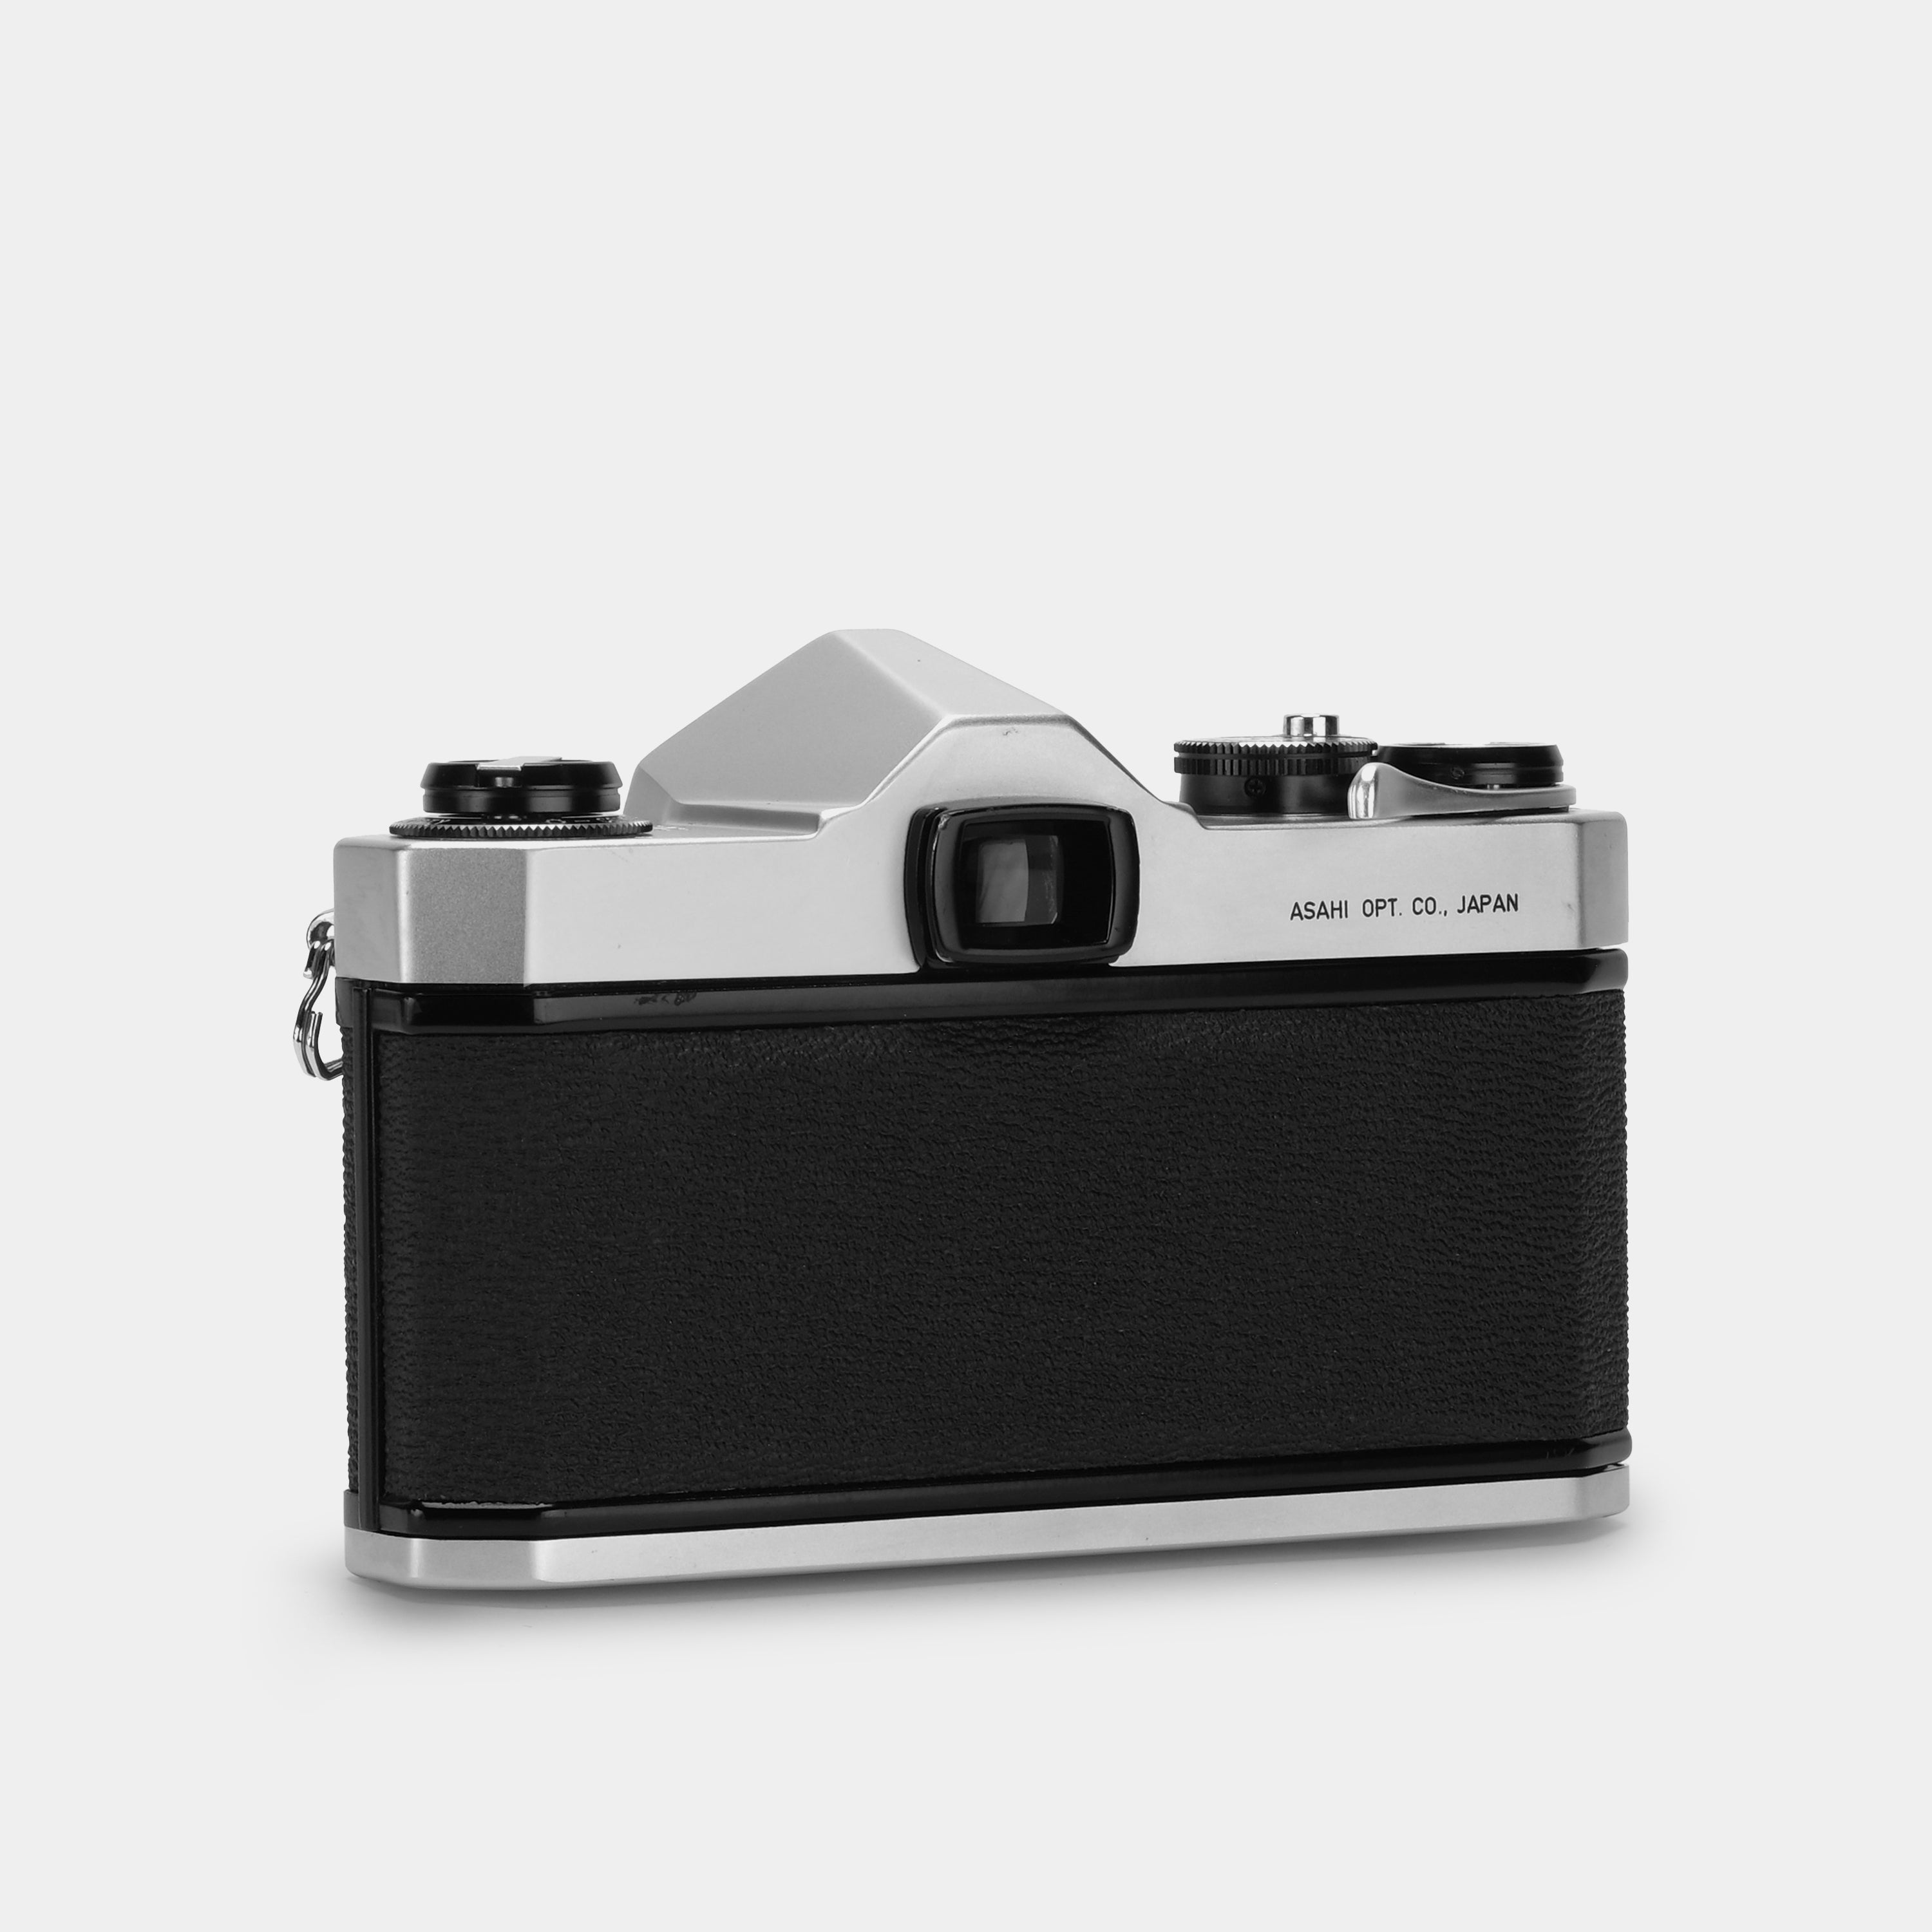 Honeywell Pentax SP500 35mm SLR Film Camera